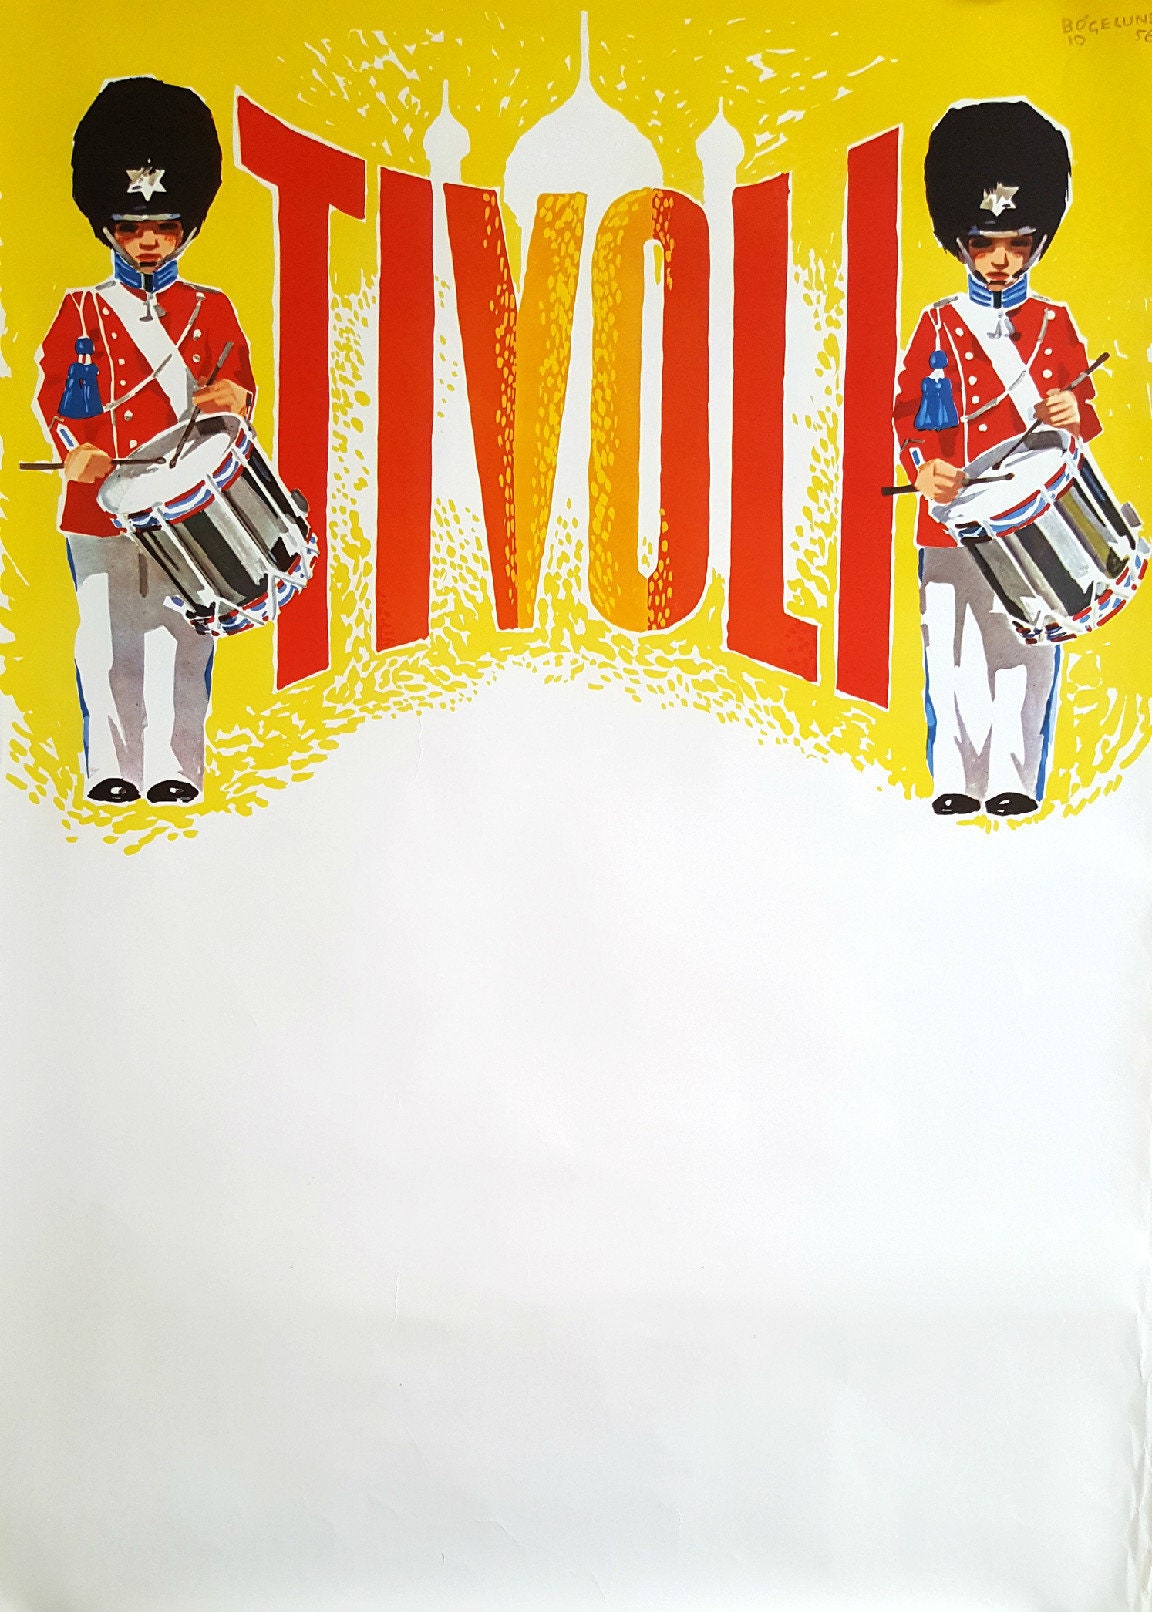 1956 Tivoli Gardens by Thor Bøgelund - Original Vintage poster